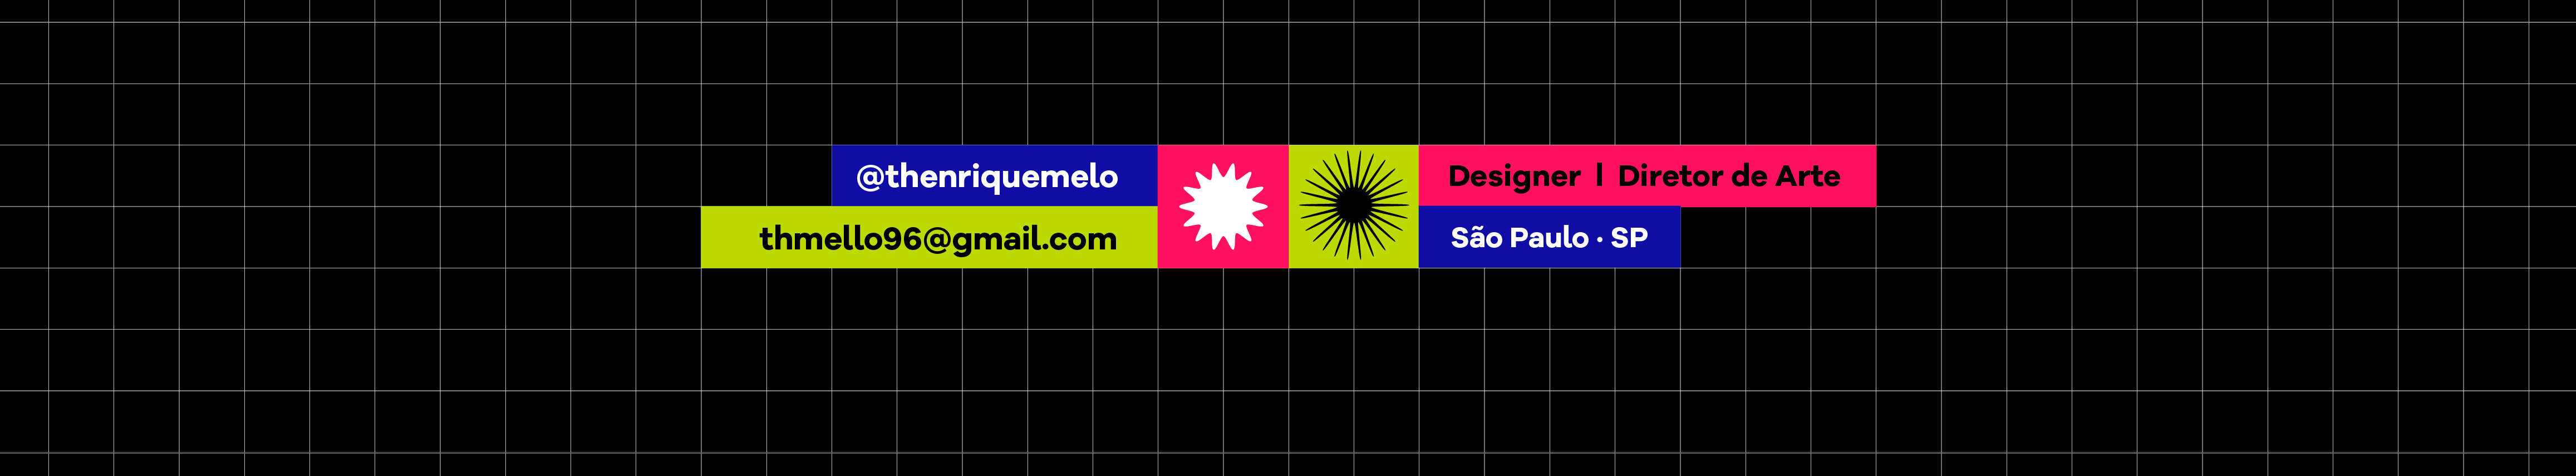 Thallysson Henrique Melo's profile banner